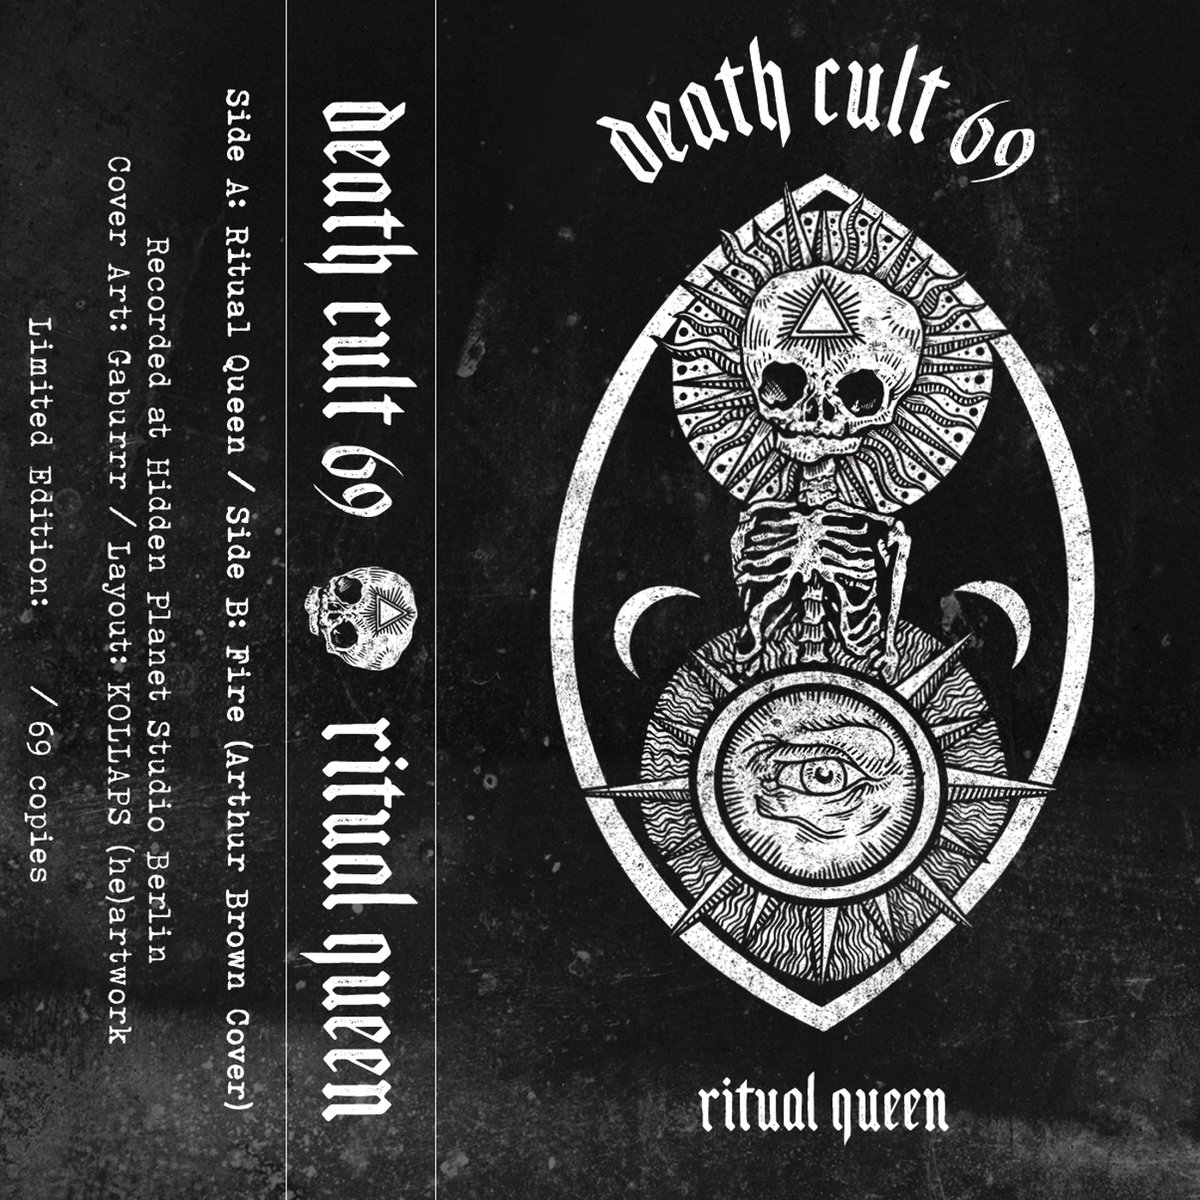 Ritual Queen  DEATH CULT 69